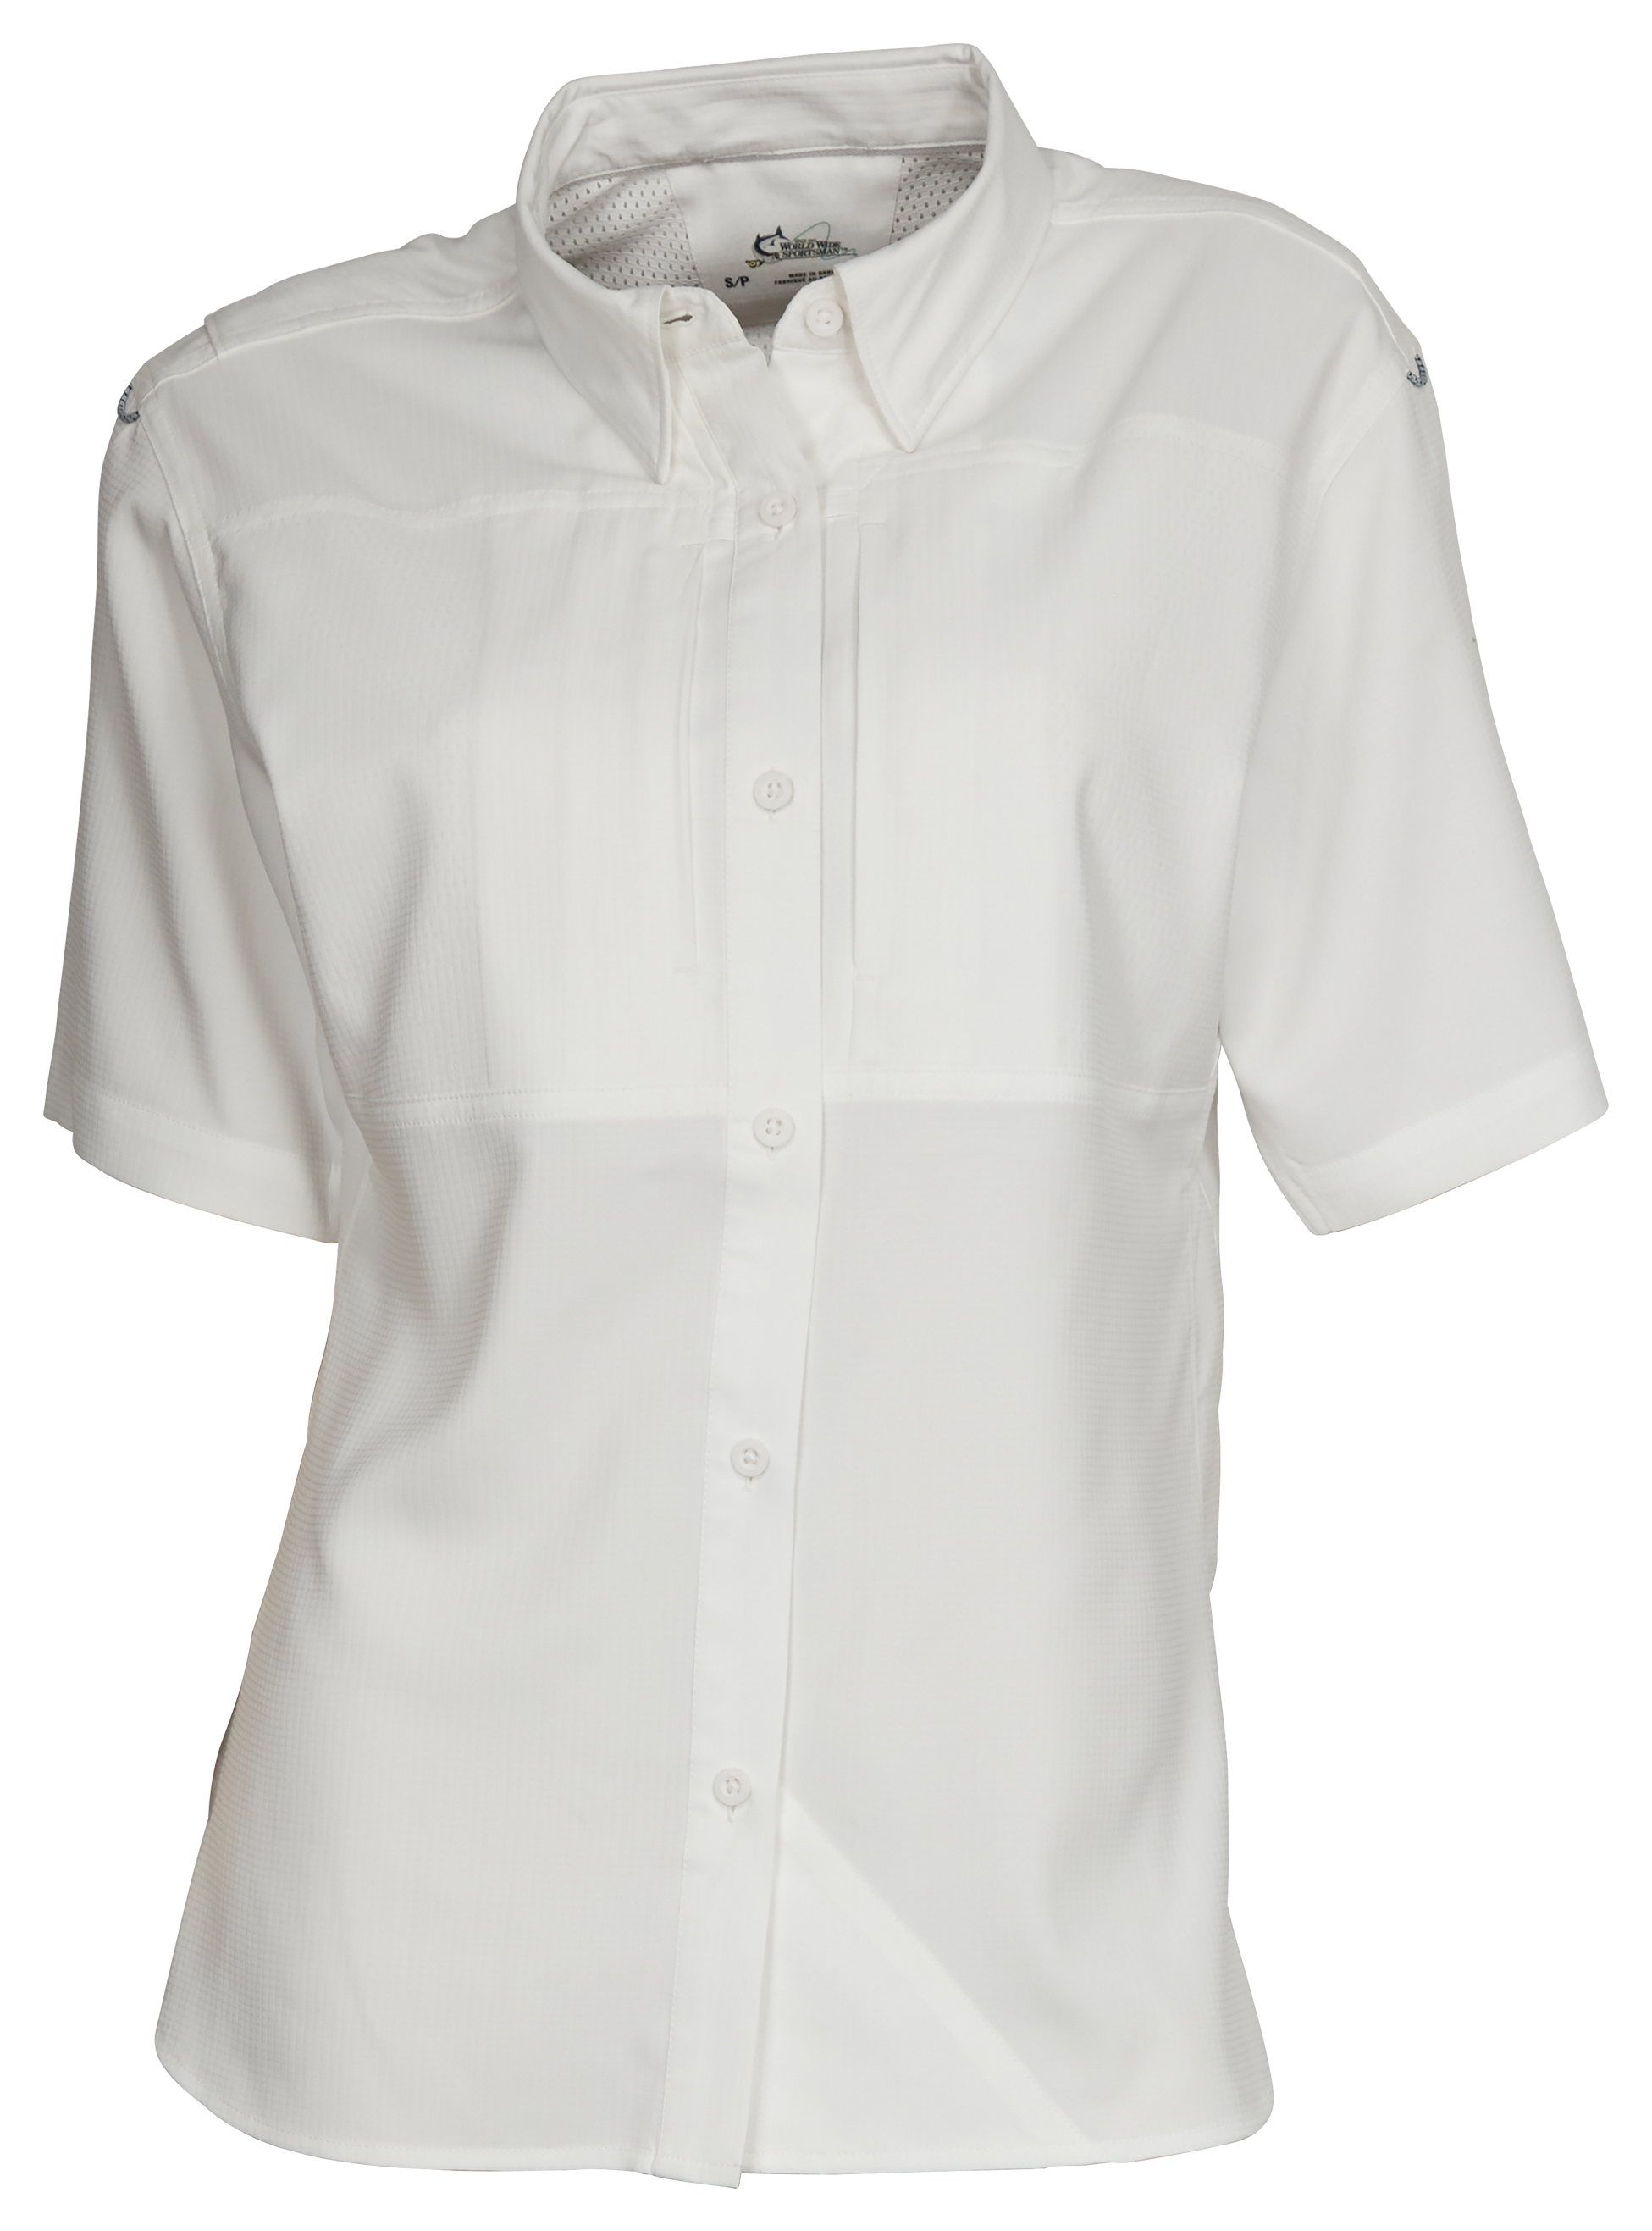 World Wide Sportsman Marina Short-Sleeve Shirt for Ladies - Bright White - XXL